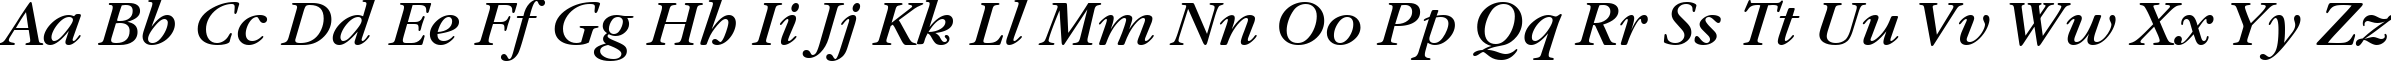 Пример написания английского алфавита шрифтом Garamond ITC Book Italic BT